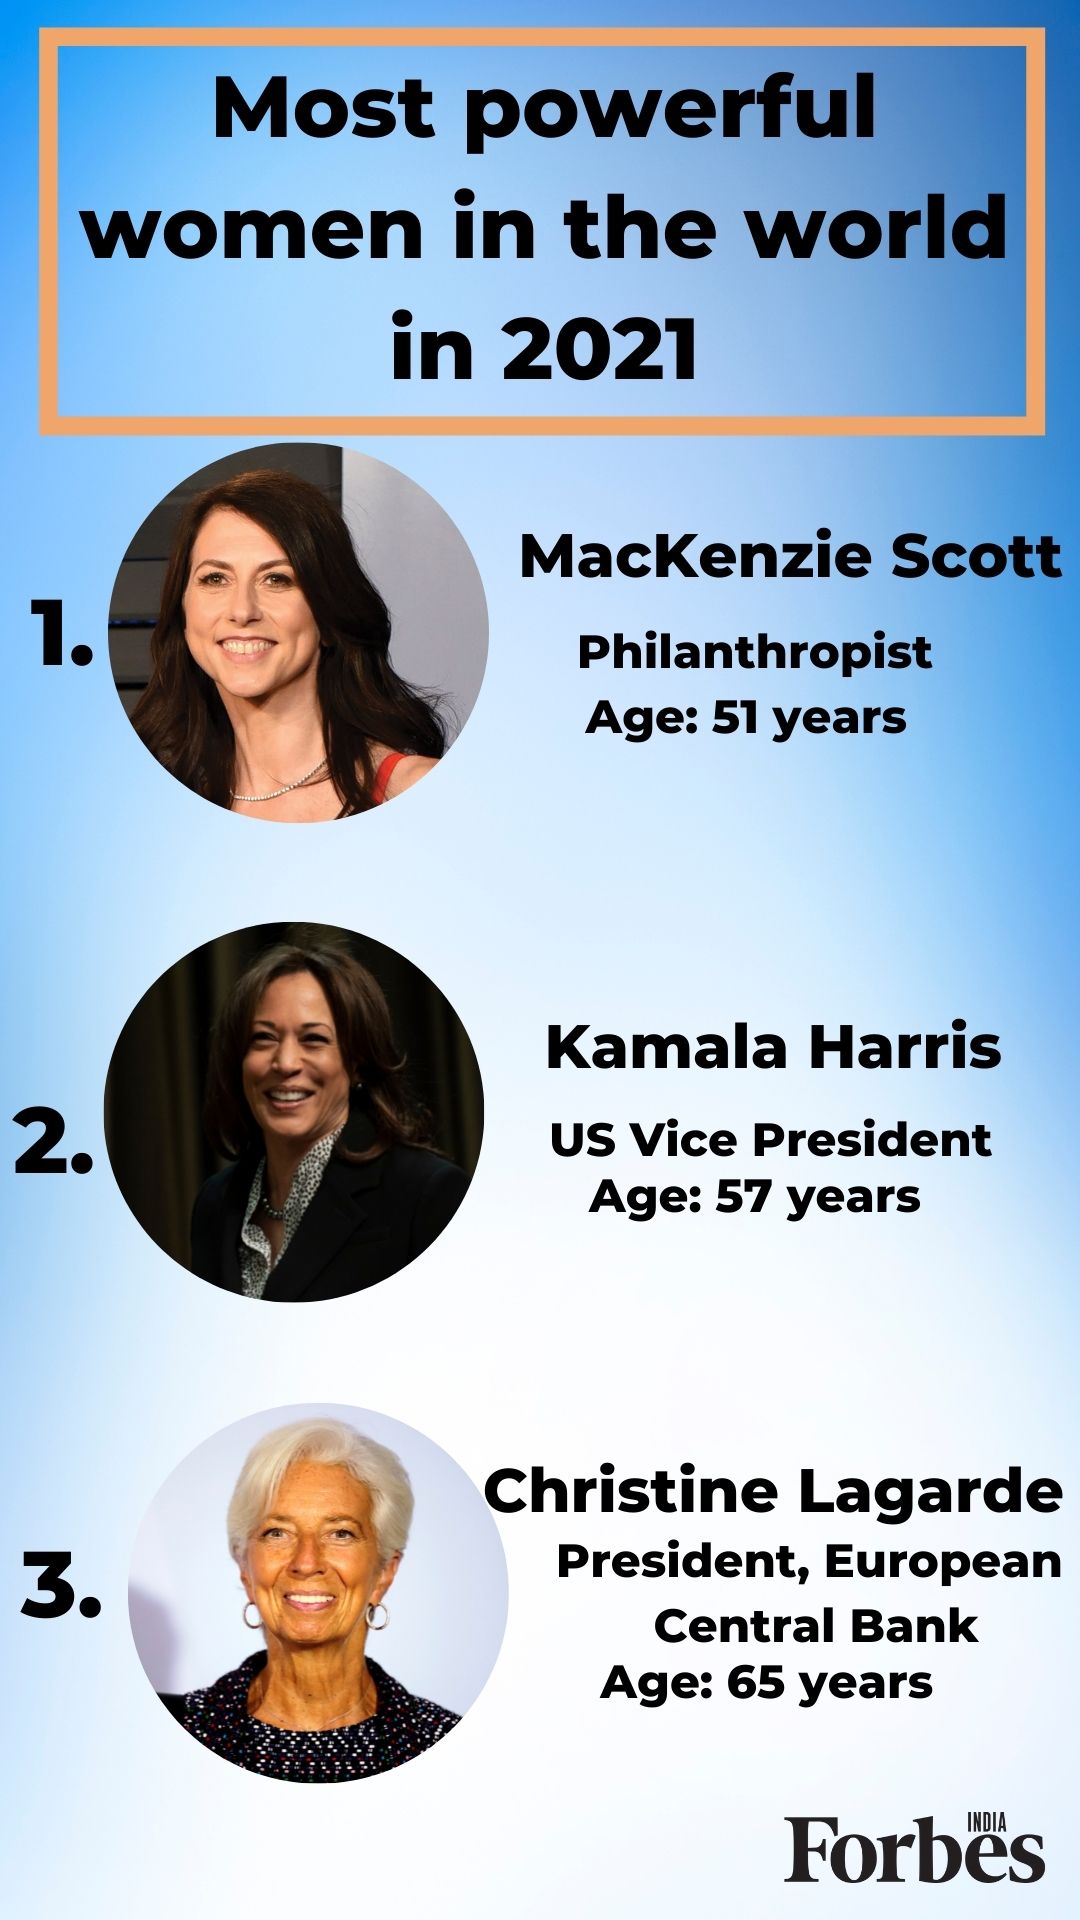 MacKenzie Scott most powerful woman in 2021 on Forbes list; Nirmala Sitharaman on rank 37